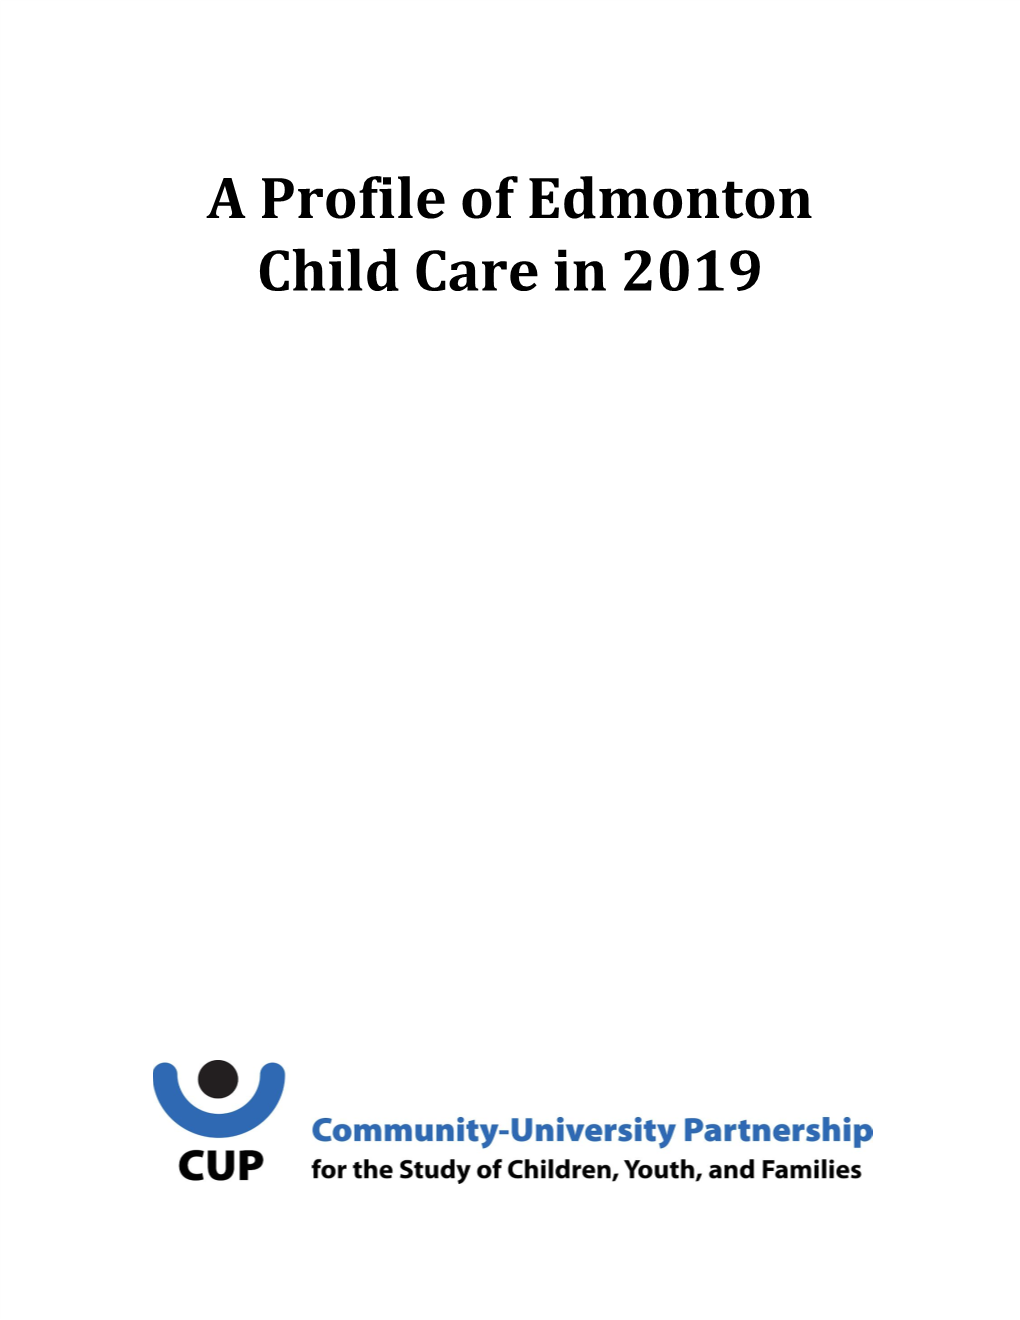 A Profile of Edmonton Child Care in 2019